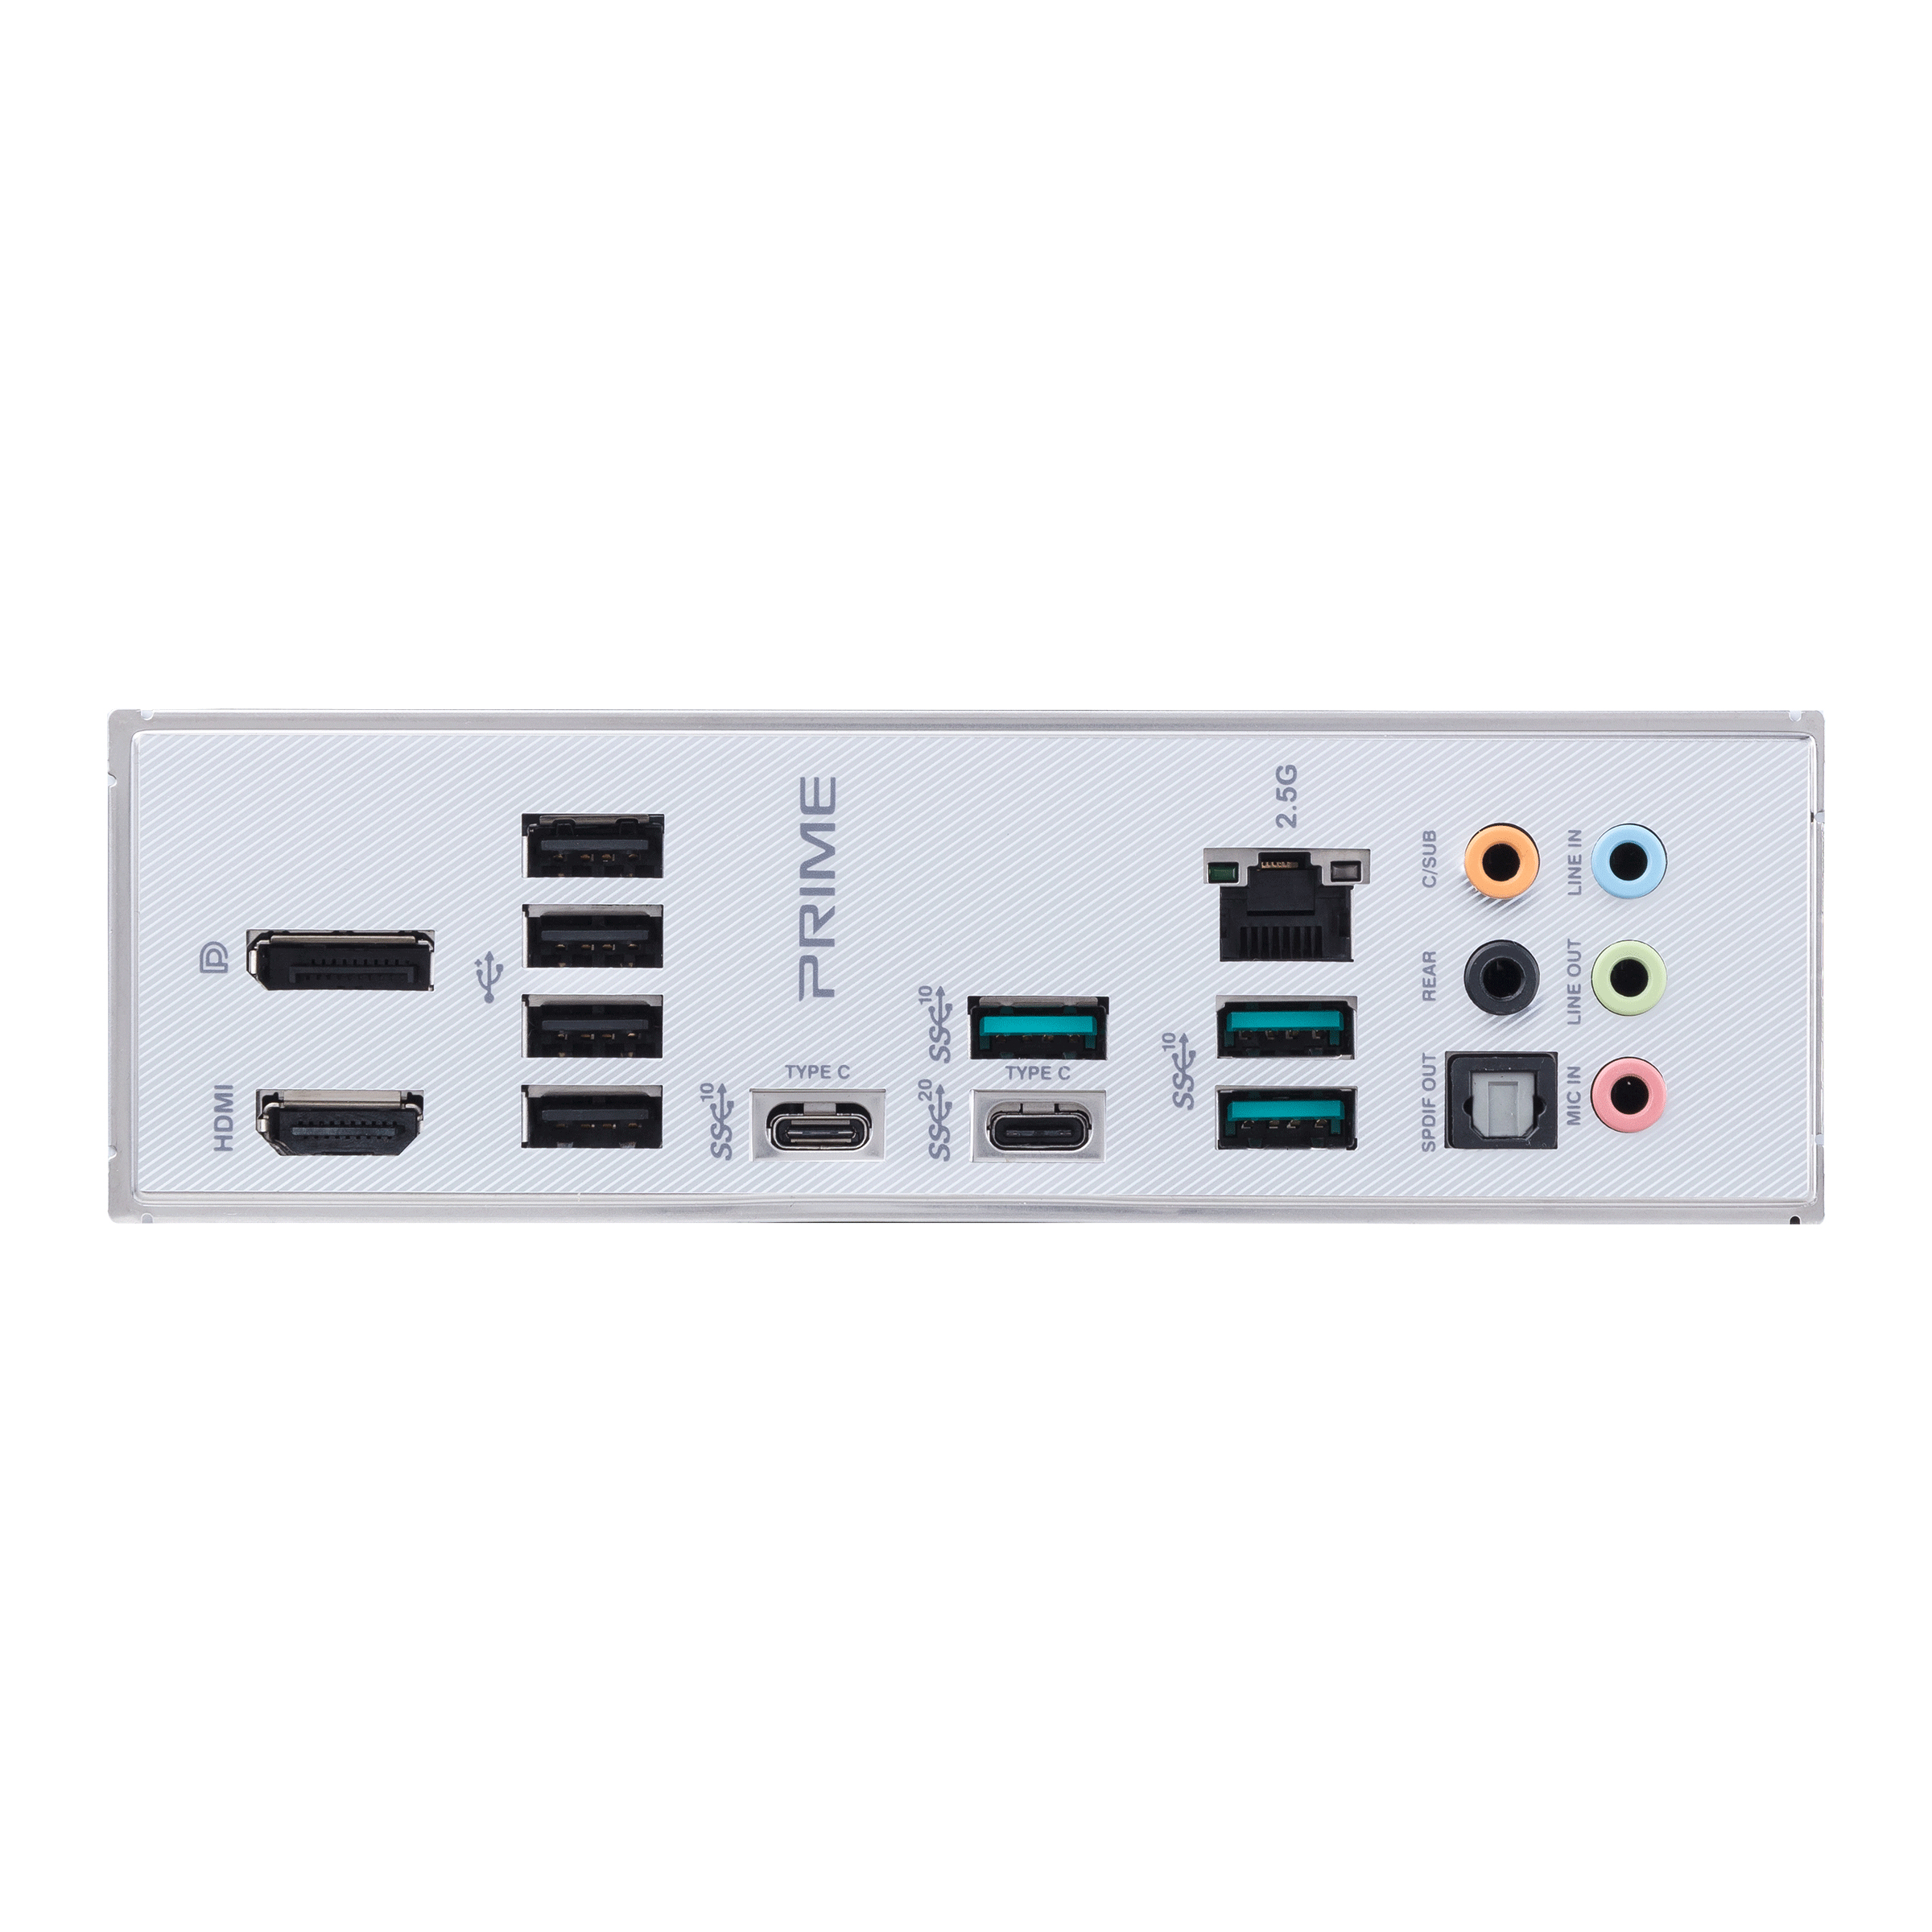 ASUS PRIME Z590-A - Motherboard - ATX - LGA1200-Sockel - Z590 - USB-C Gen2, USB-C Gen1, USB 3.2 Gen 1, USB 3.2 Gen 2, USB-C Gen 2x2 - 2.5 Gigabit LAN - Onboard-Grafik (CPU erforderlich)